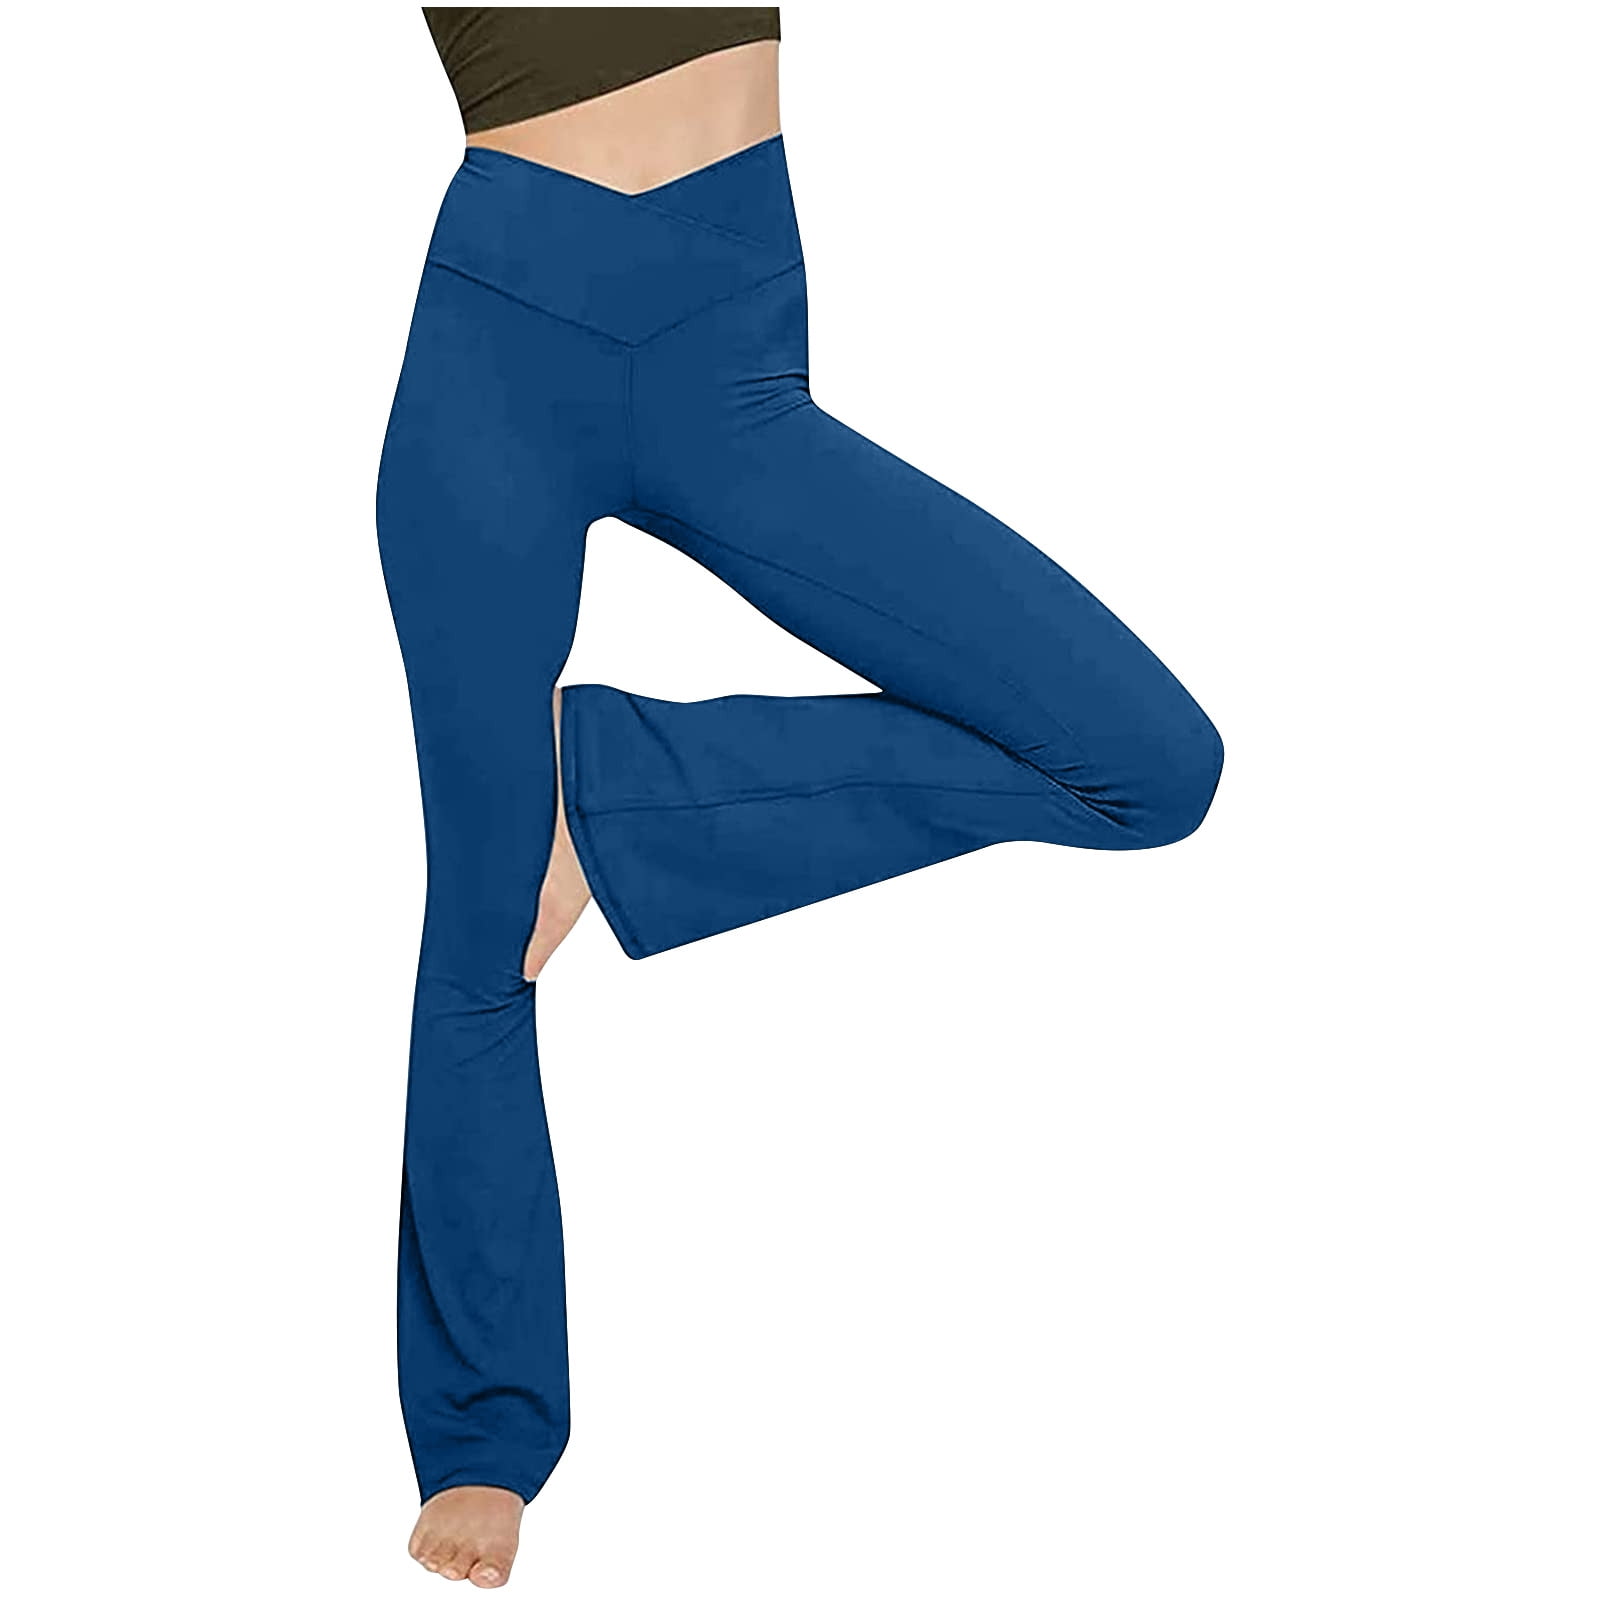 TIHLMK Cargo Pants Women Sales Clearance Yoga Leggings Fitness Running Gym  Ladies Sports Active Pants